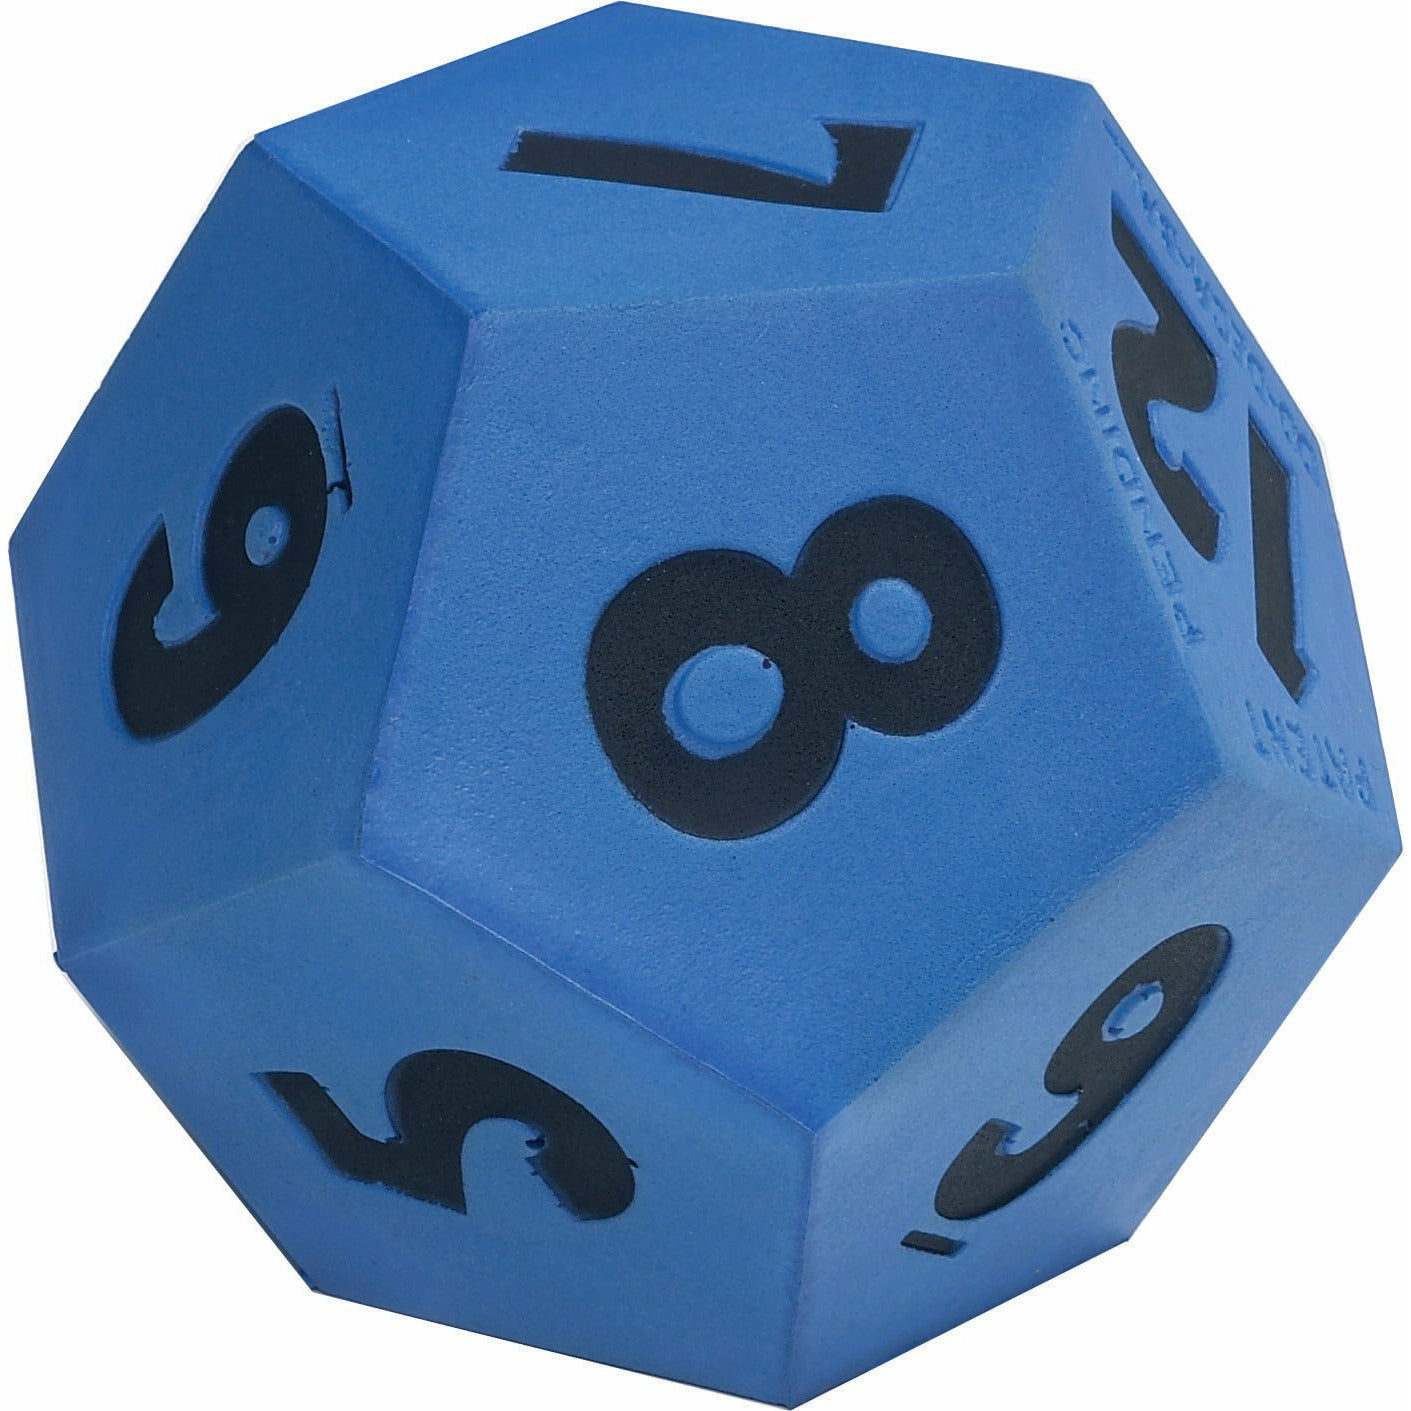 Jumbo Polyhedra Foam Dice, 12-sided